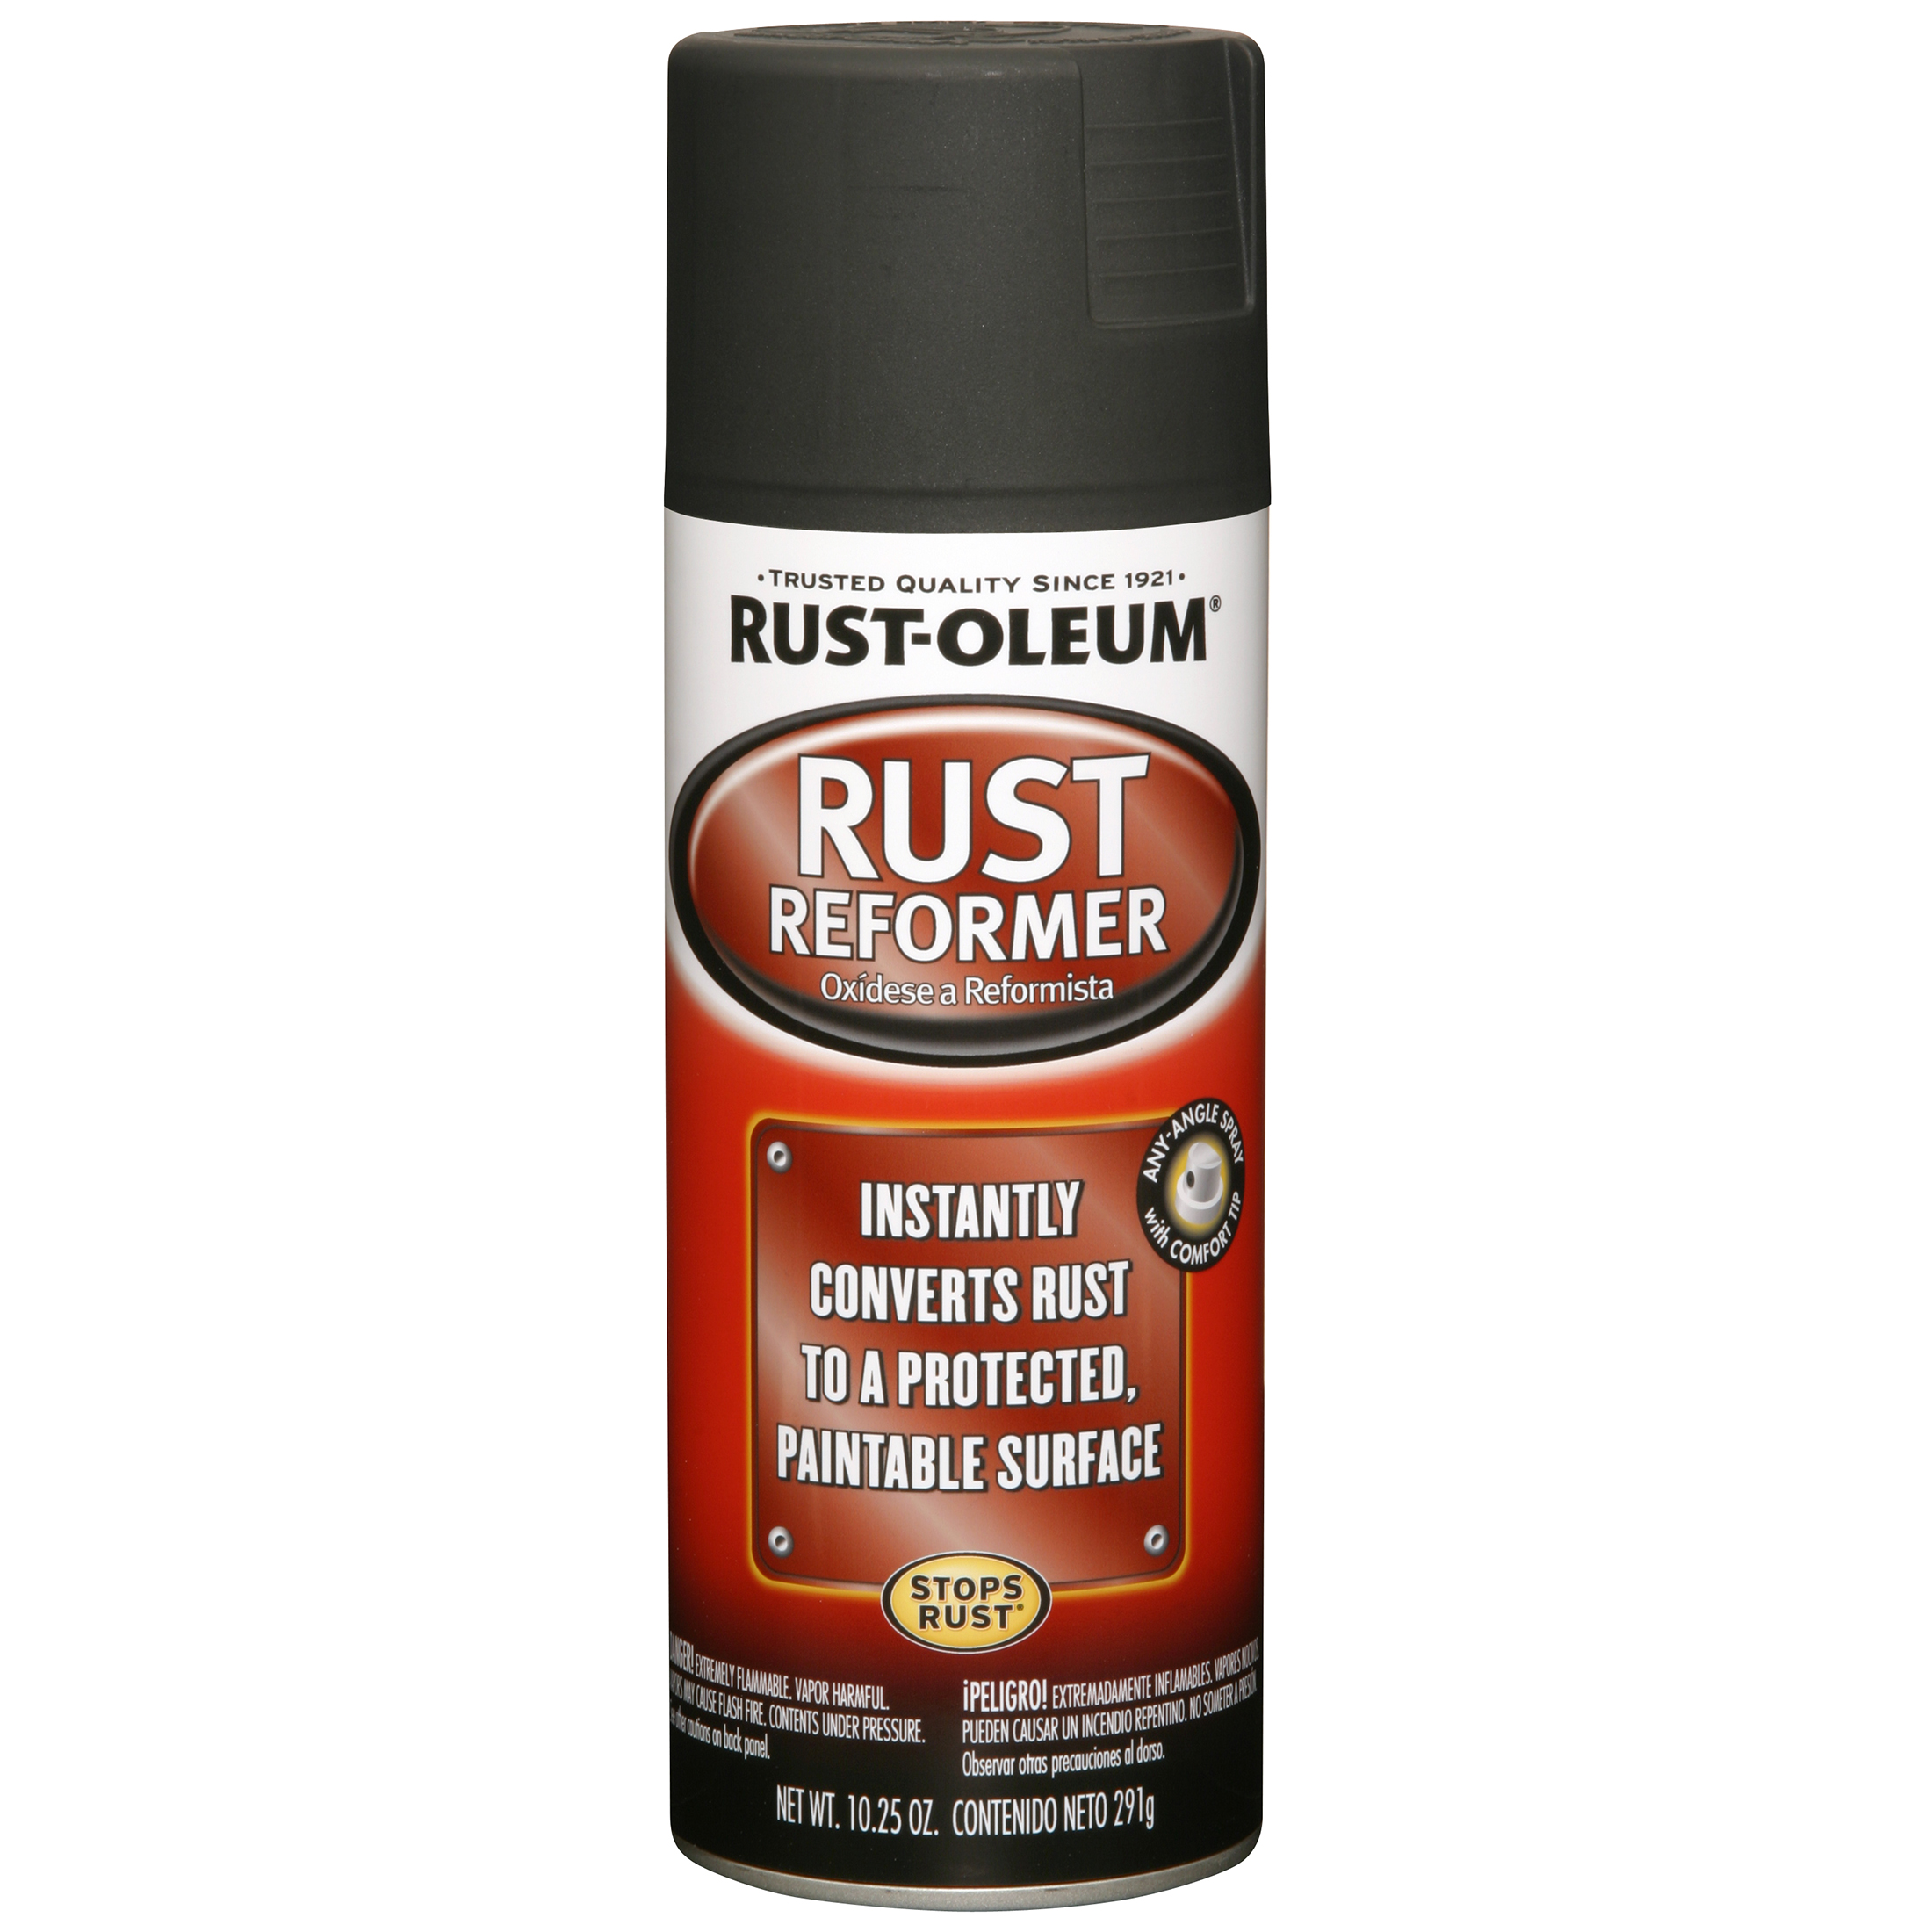 Black, Rust-Oleum Automotive Rust Reformer Flat Spray Paint-248658, 10.25 oz - image 2 of 9